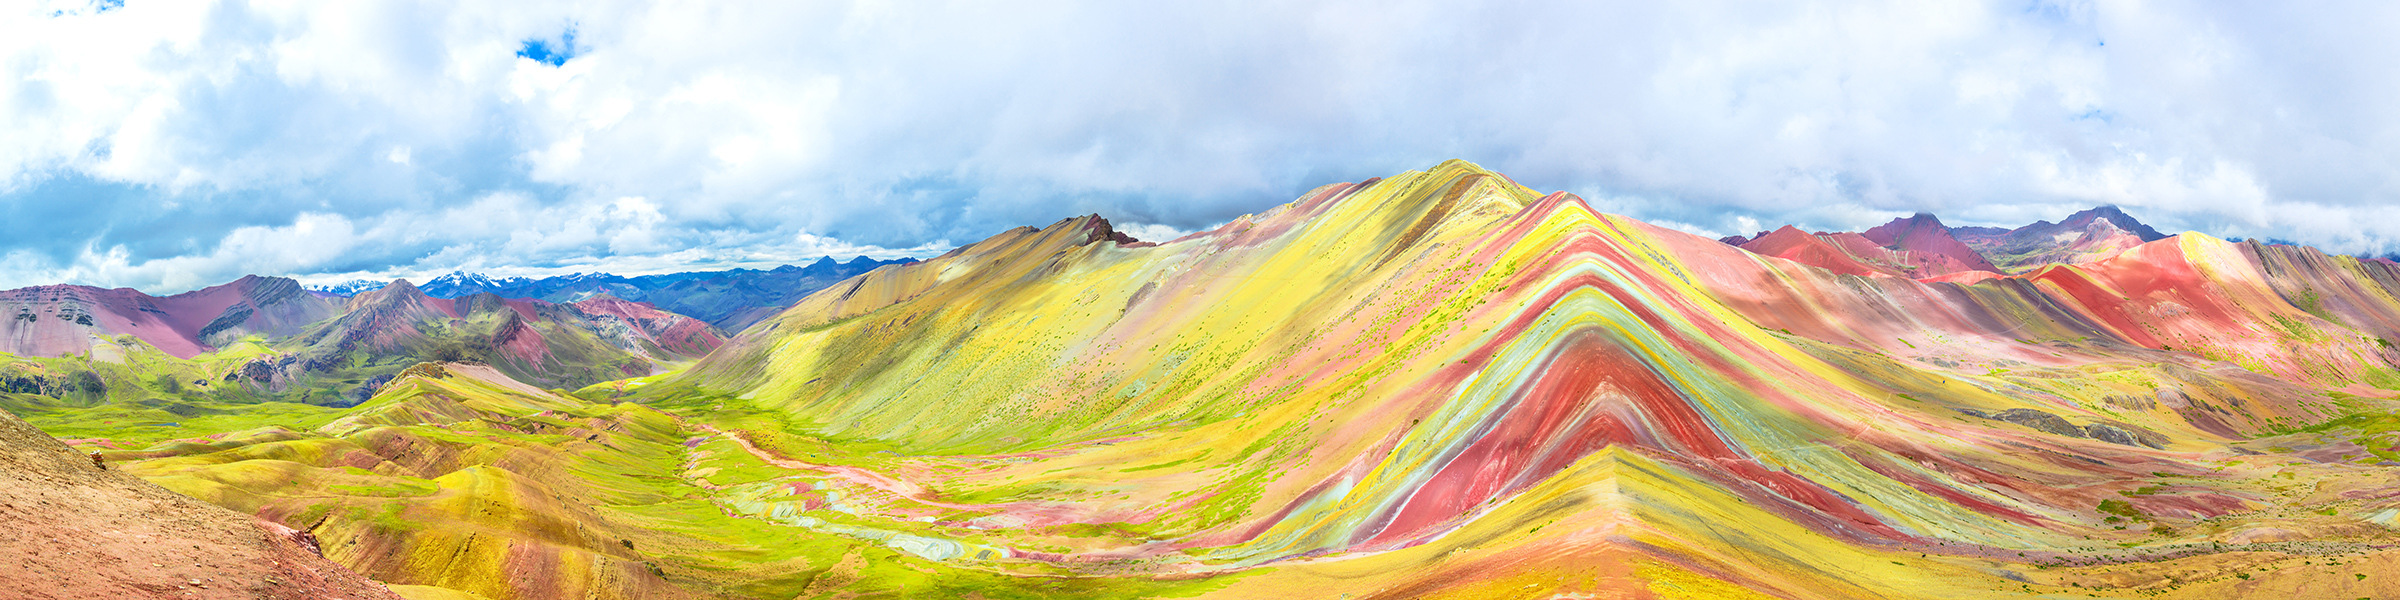 Peru Vinicunca Rainbow Mountain